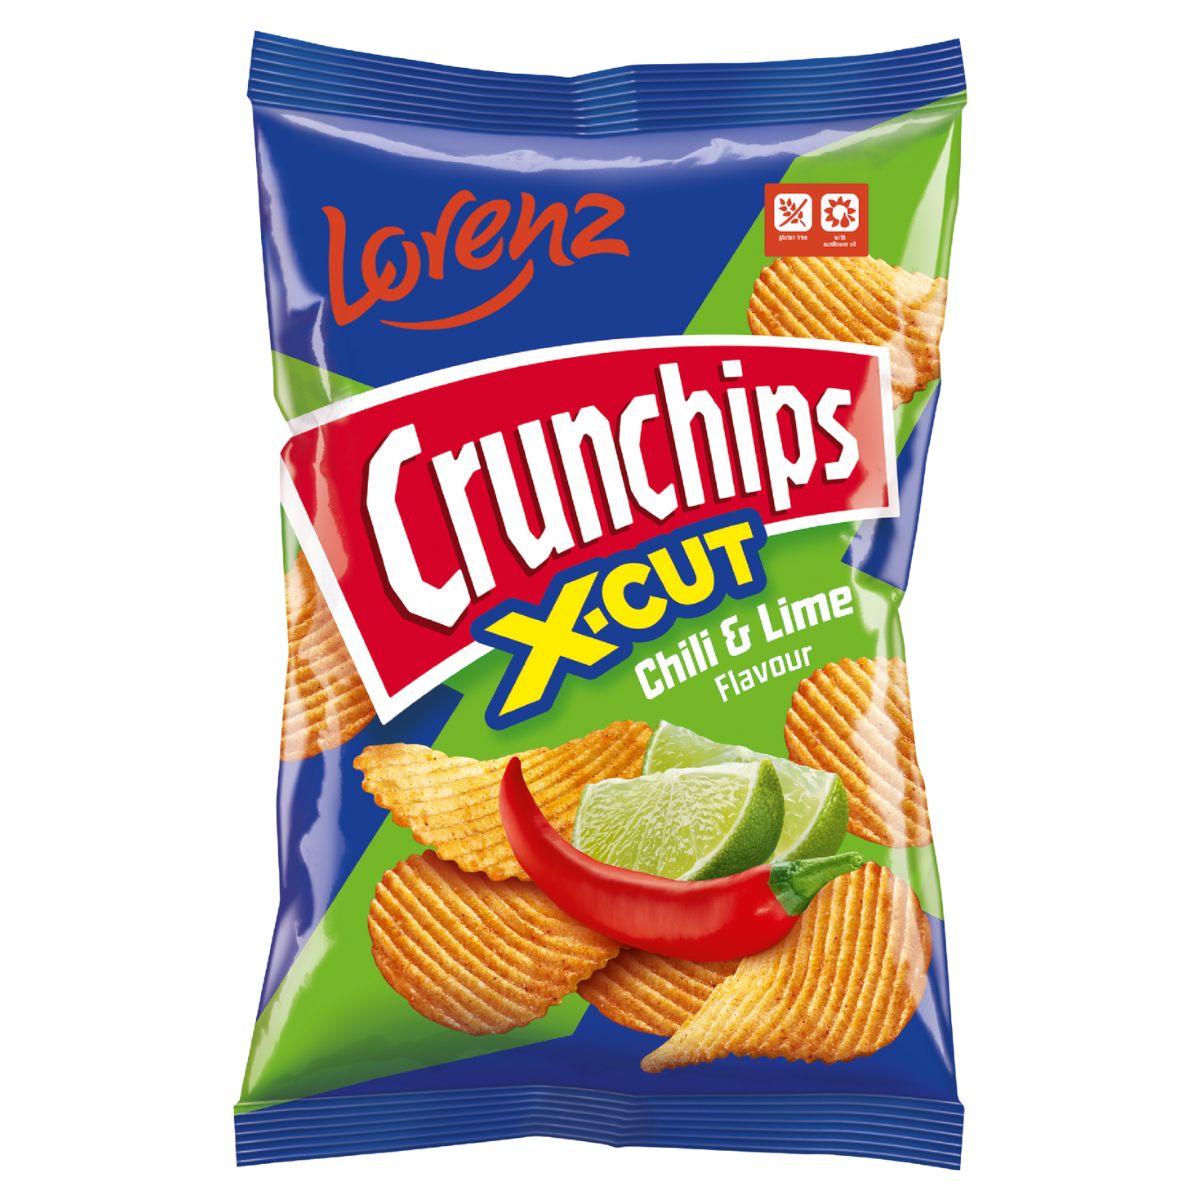 A bag of Lorenz - Crunchips X-Cut Chilli & Lime - 130g chips.